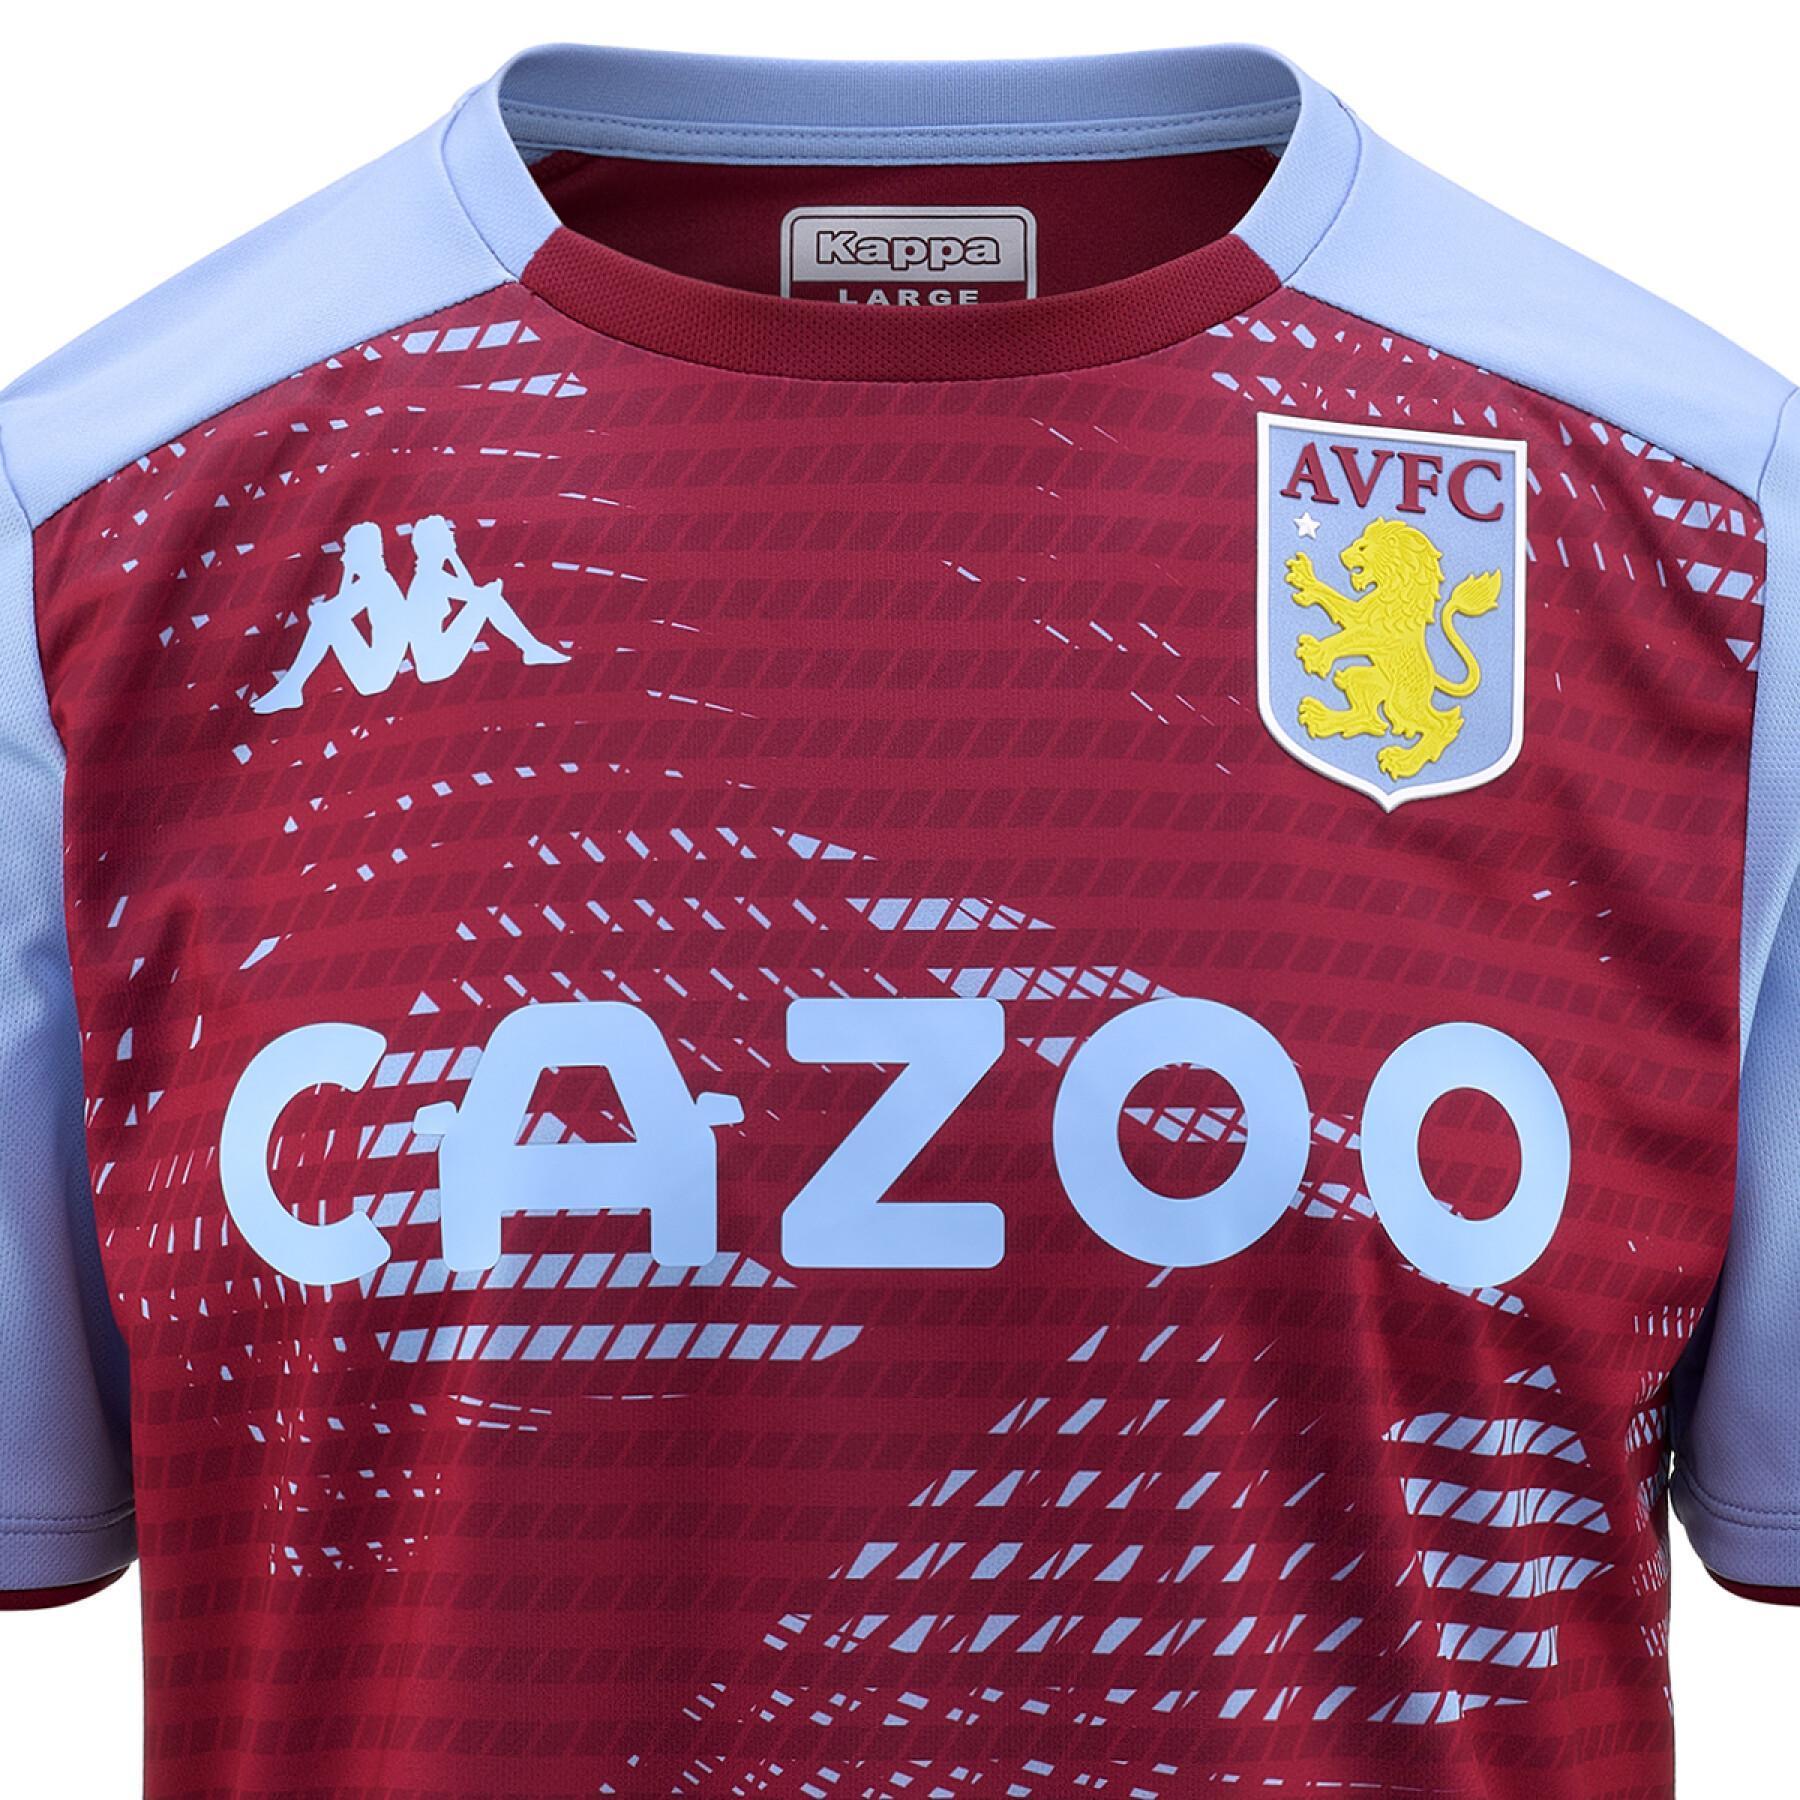 Camisola de treino Aston Villa FC 2021/22 aboupre pro 5